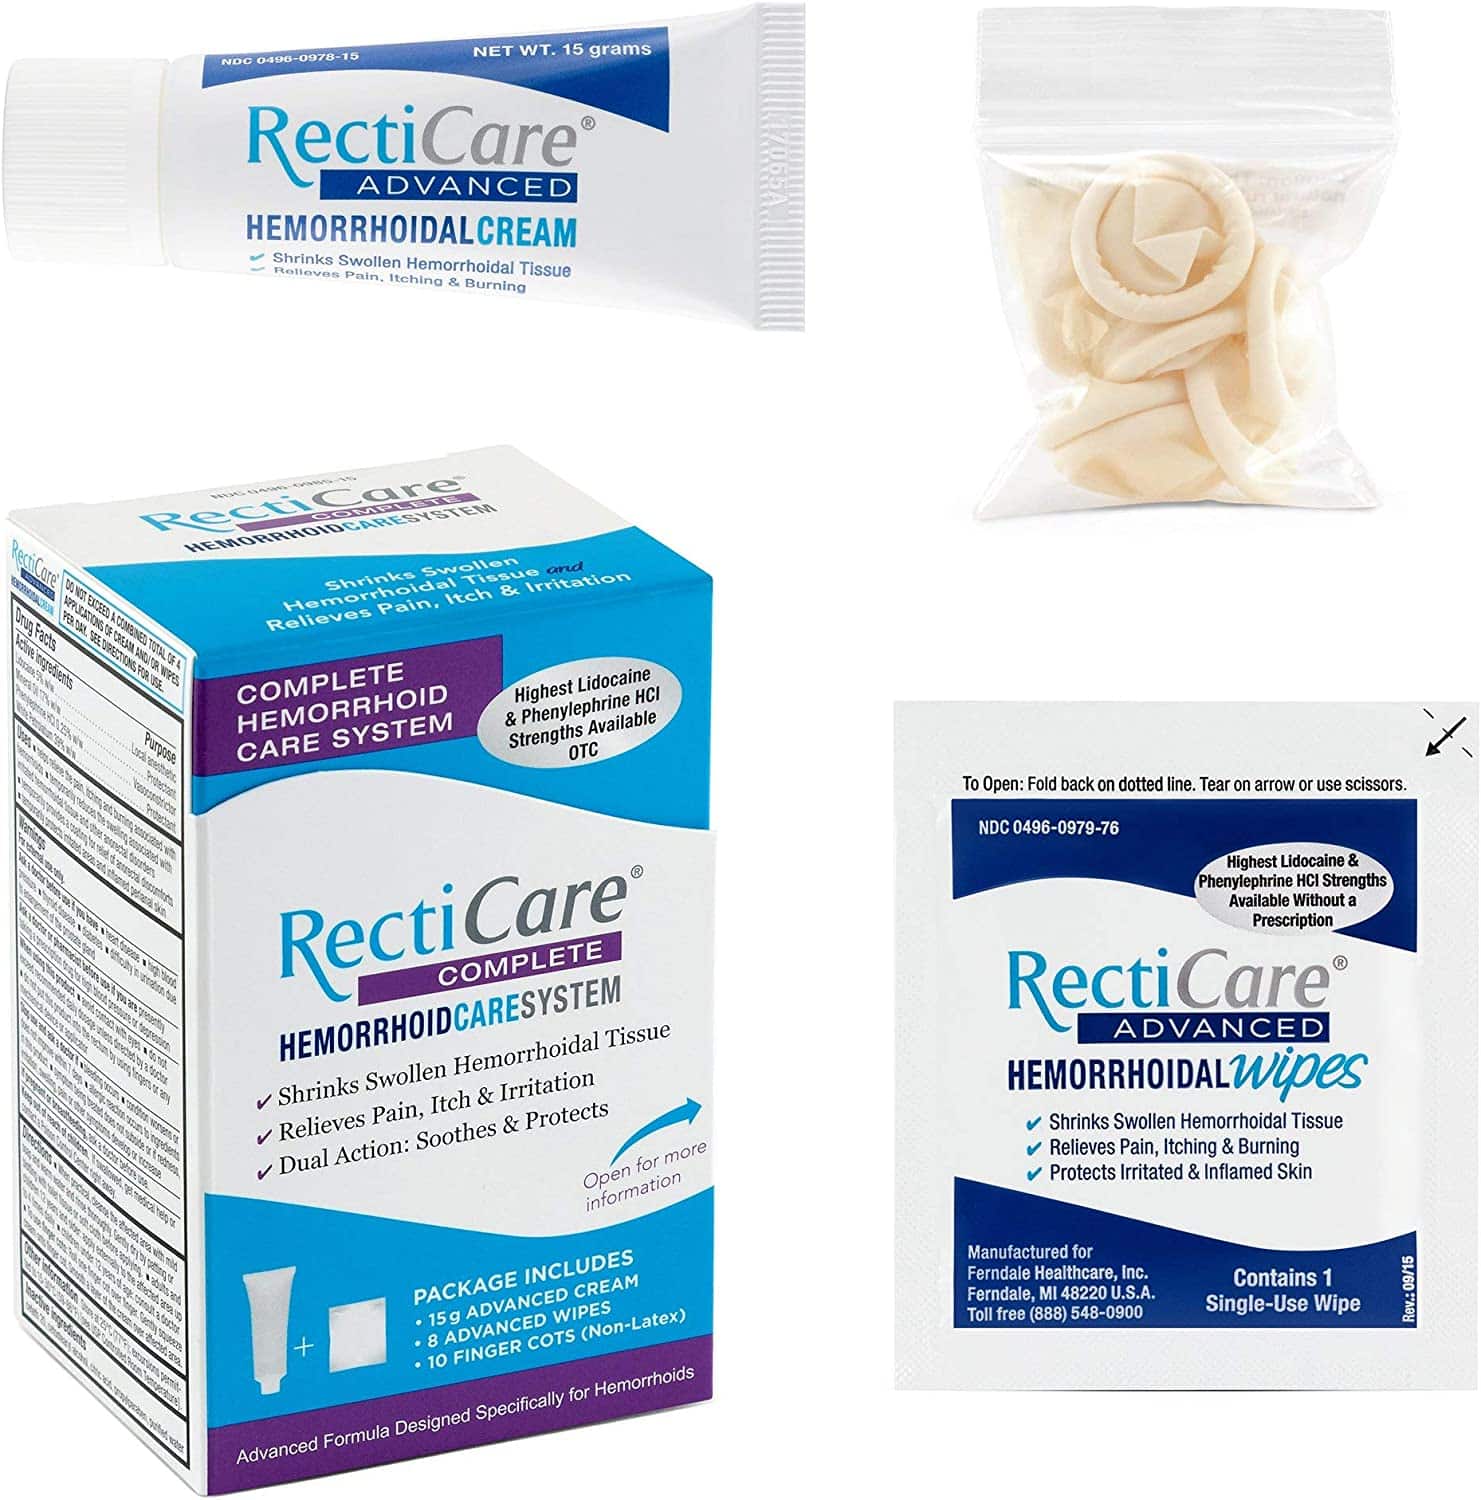 Amazon.com: RectiCare Complete Hemorrhoid Care System: Advanced ...